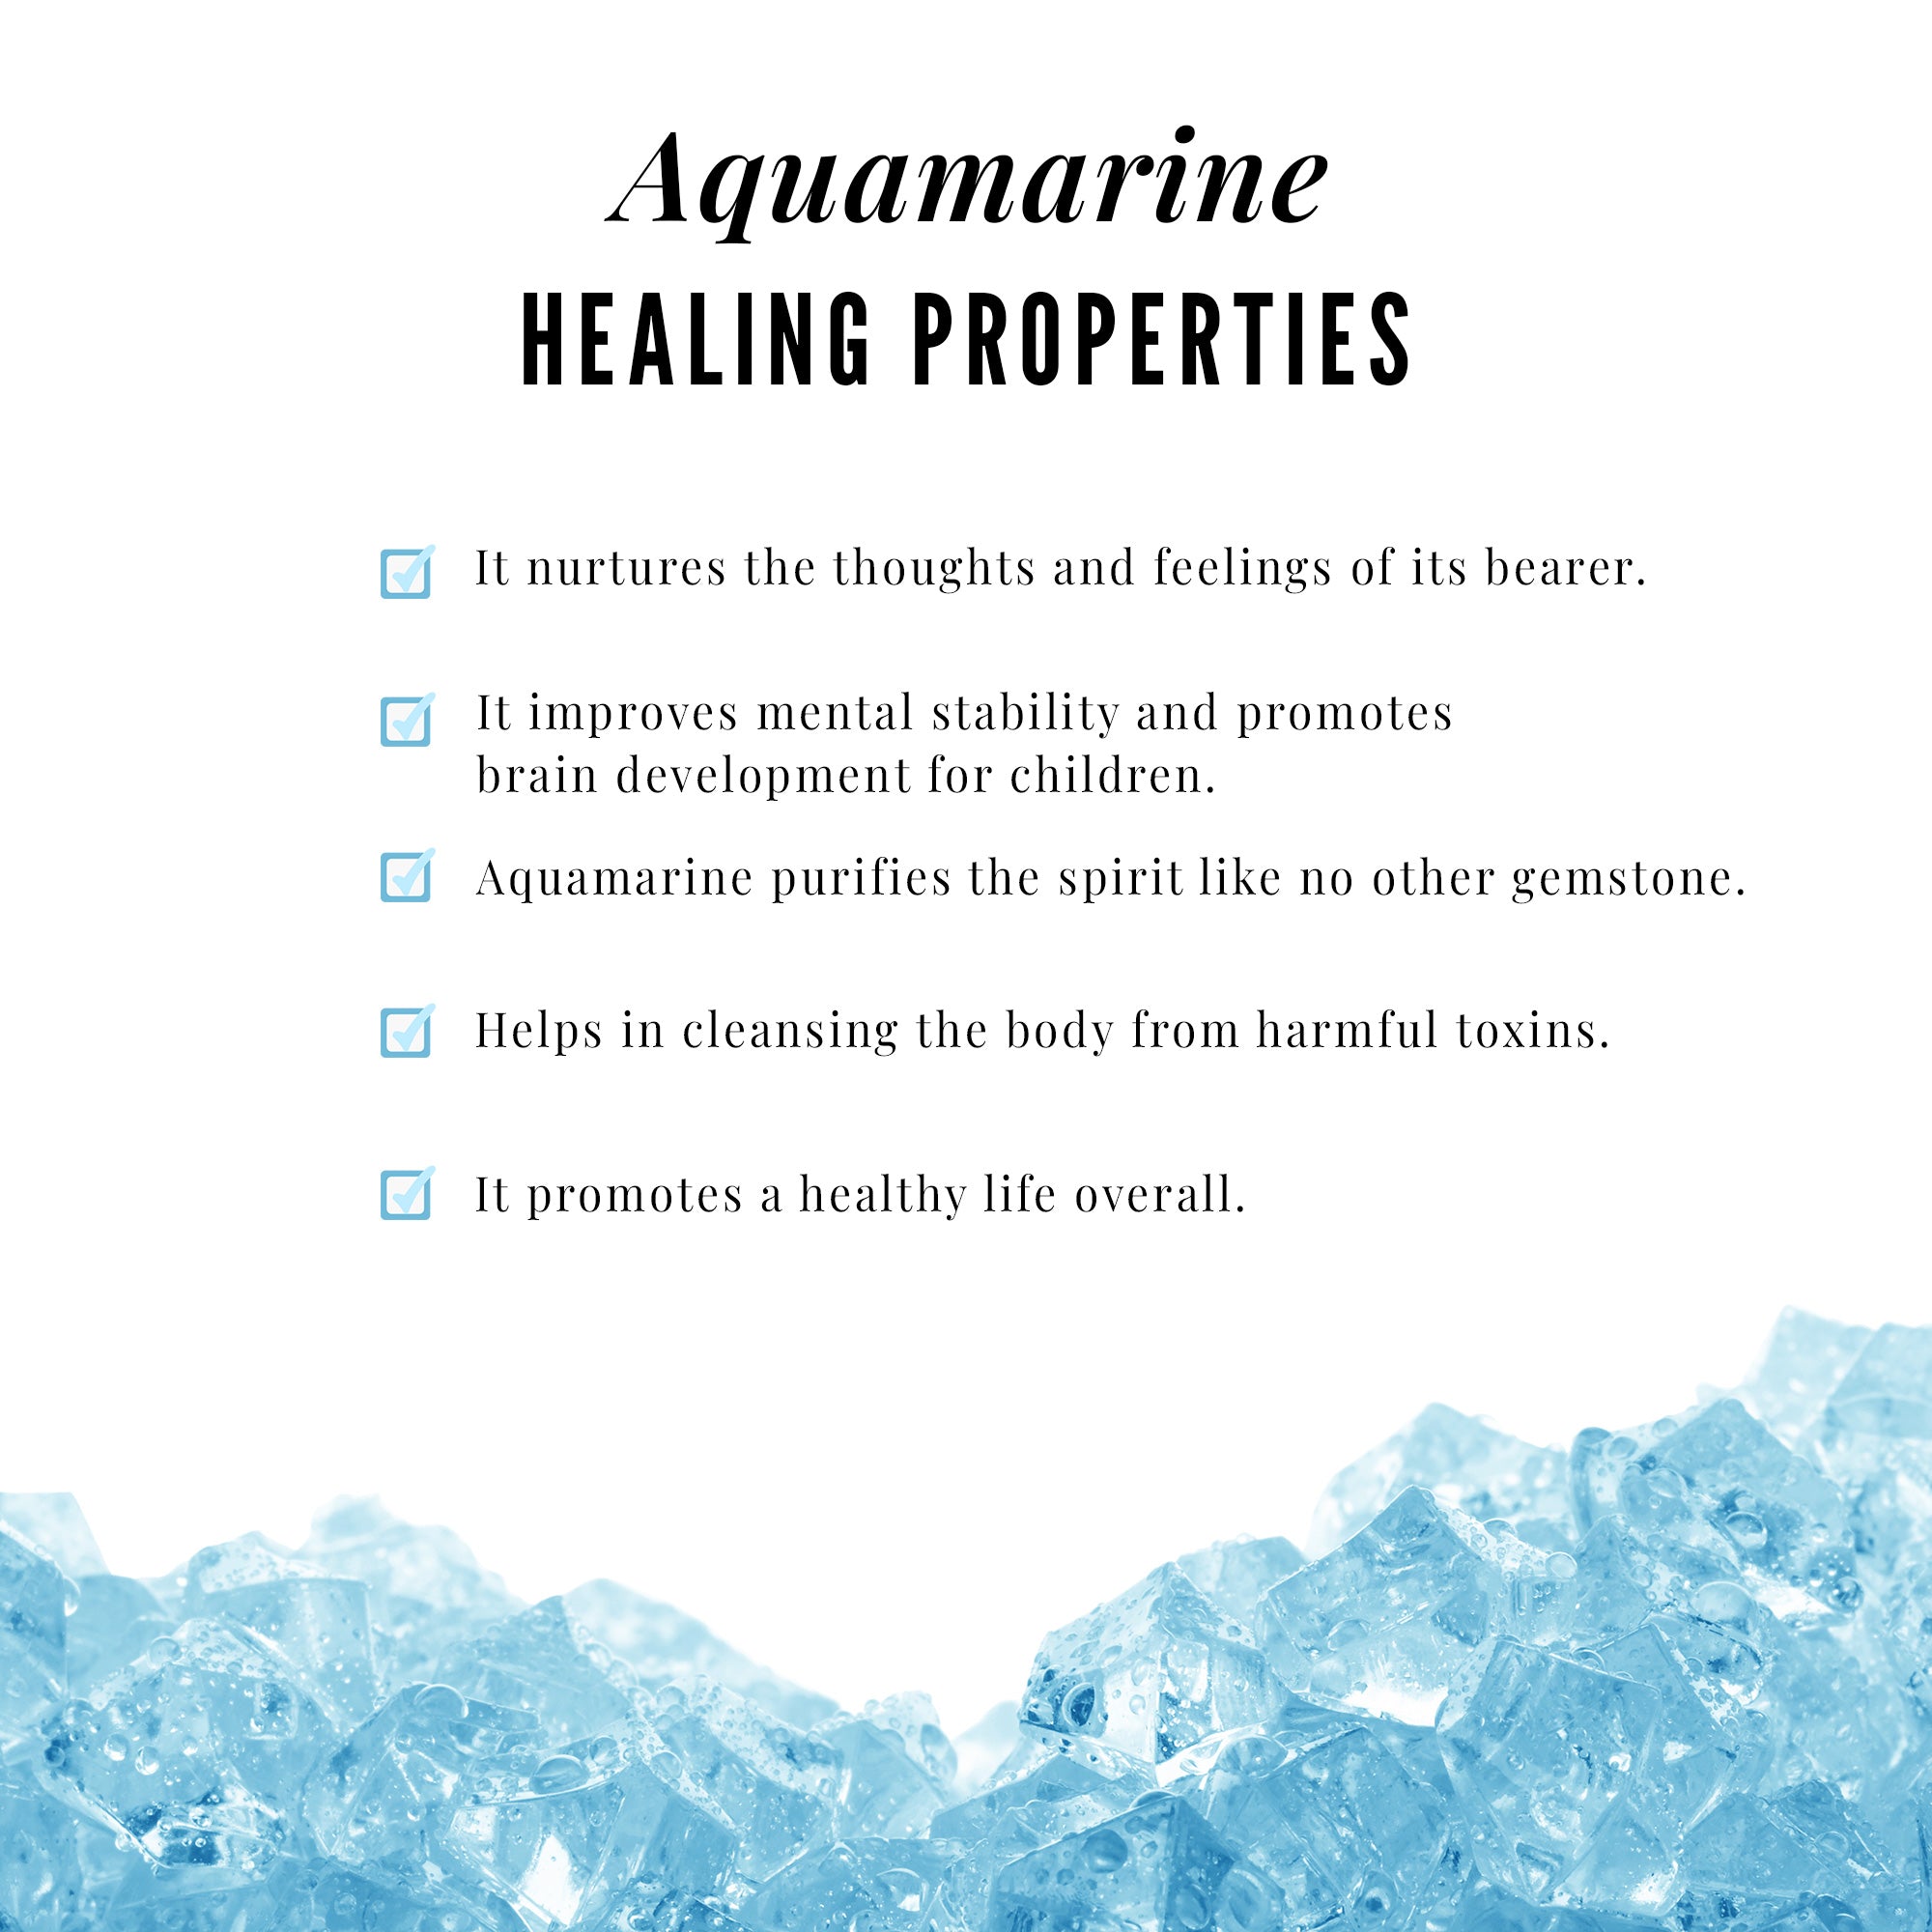 Pear Shape Aquamarine and Diamond Solitaire Ring in Split Shank Aquamarine - ( AAA ) - Quality - Rosec Jewels